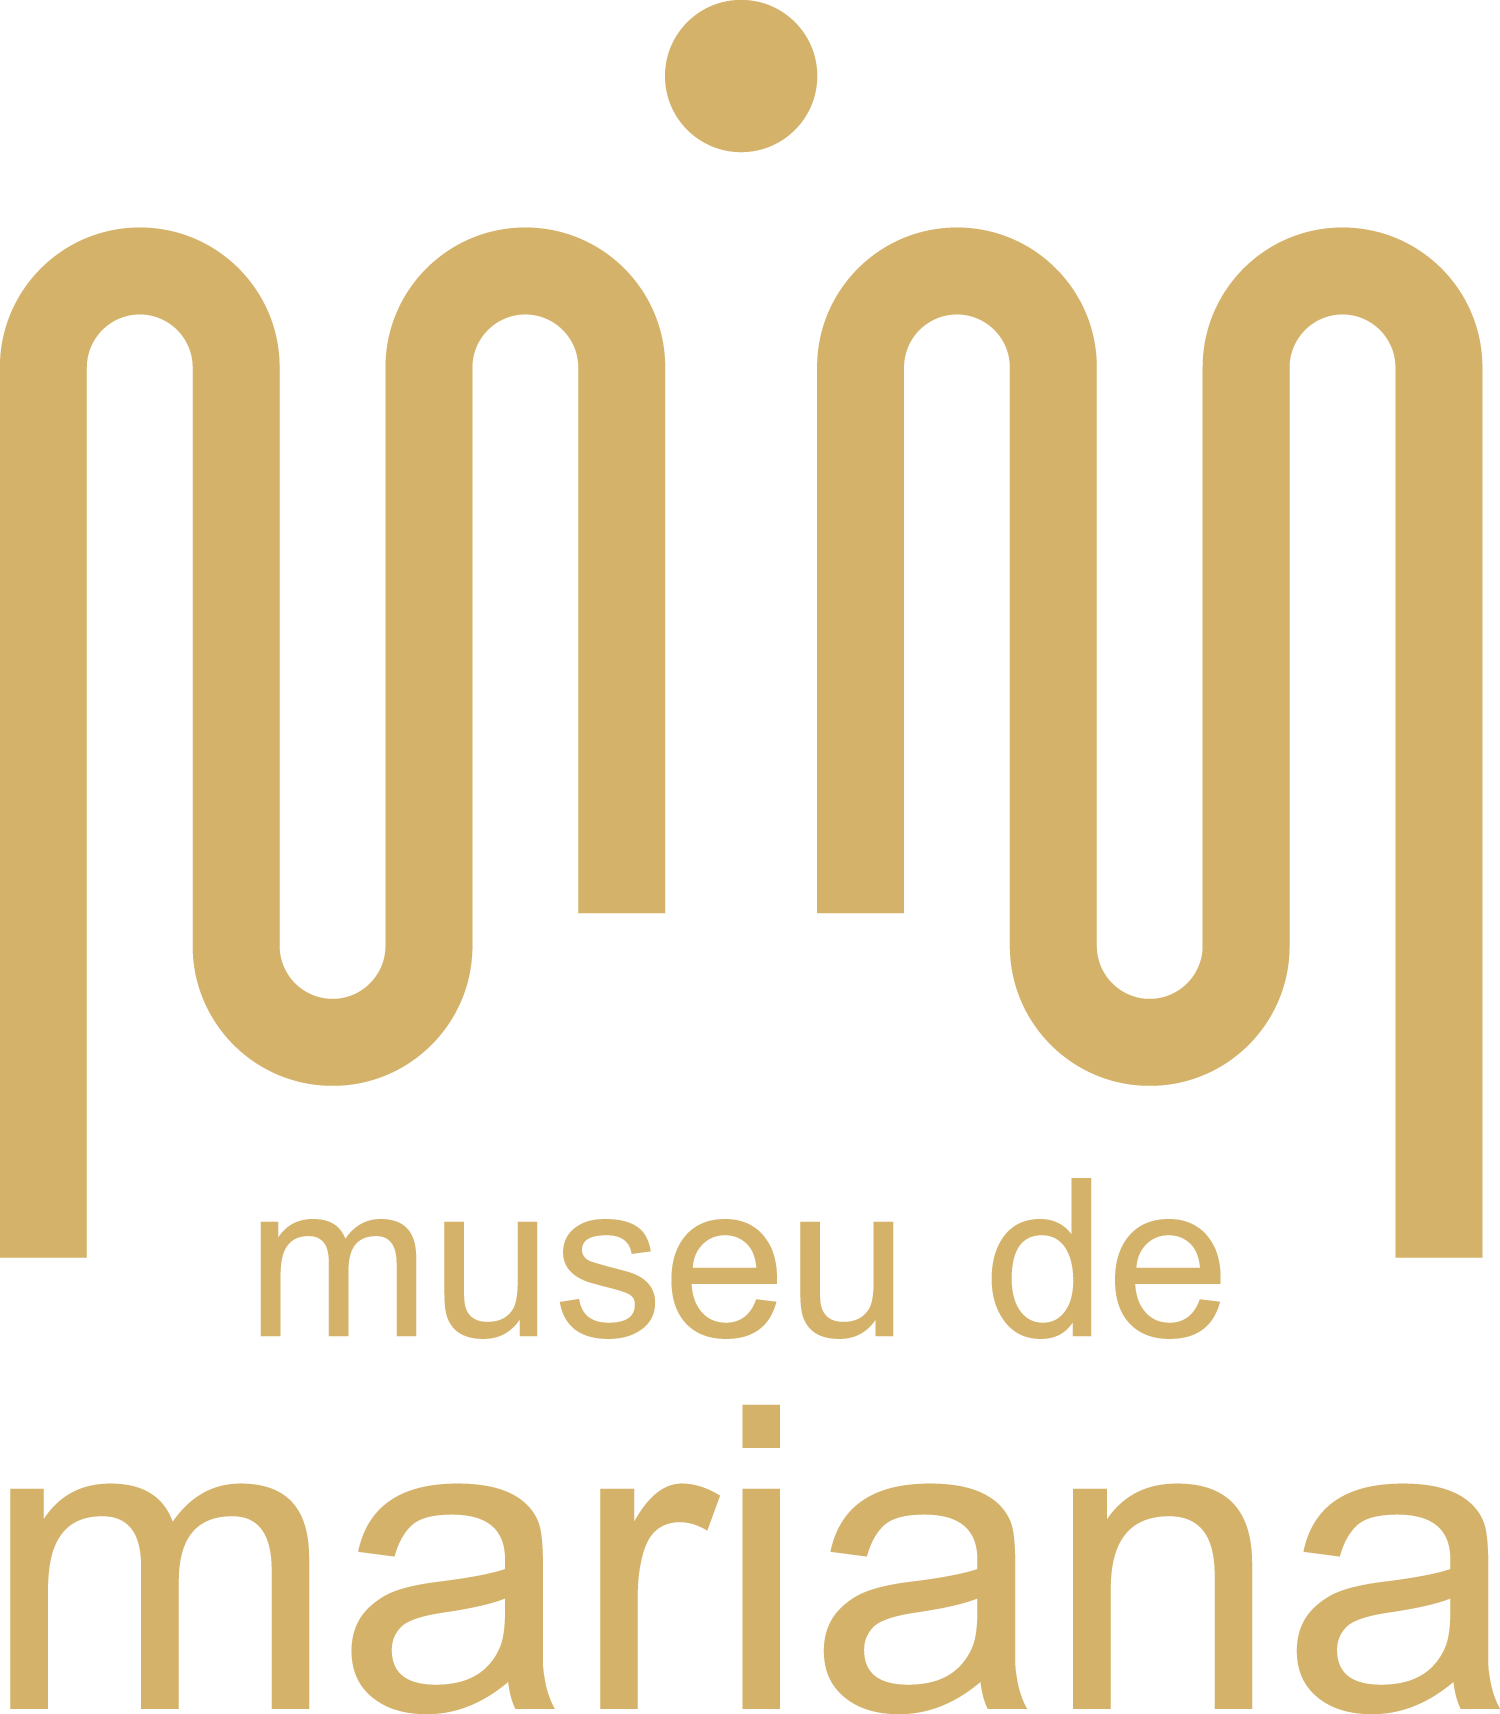 Museu de Mariana